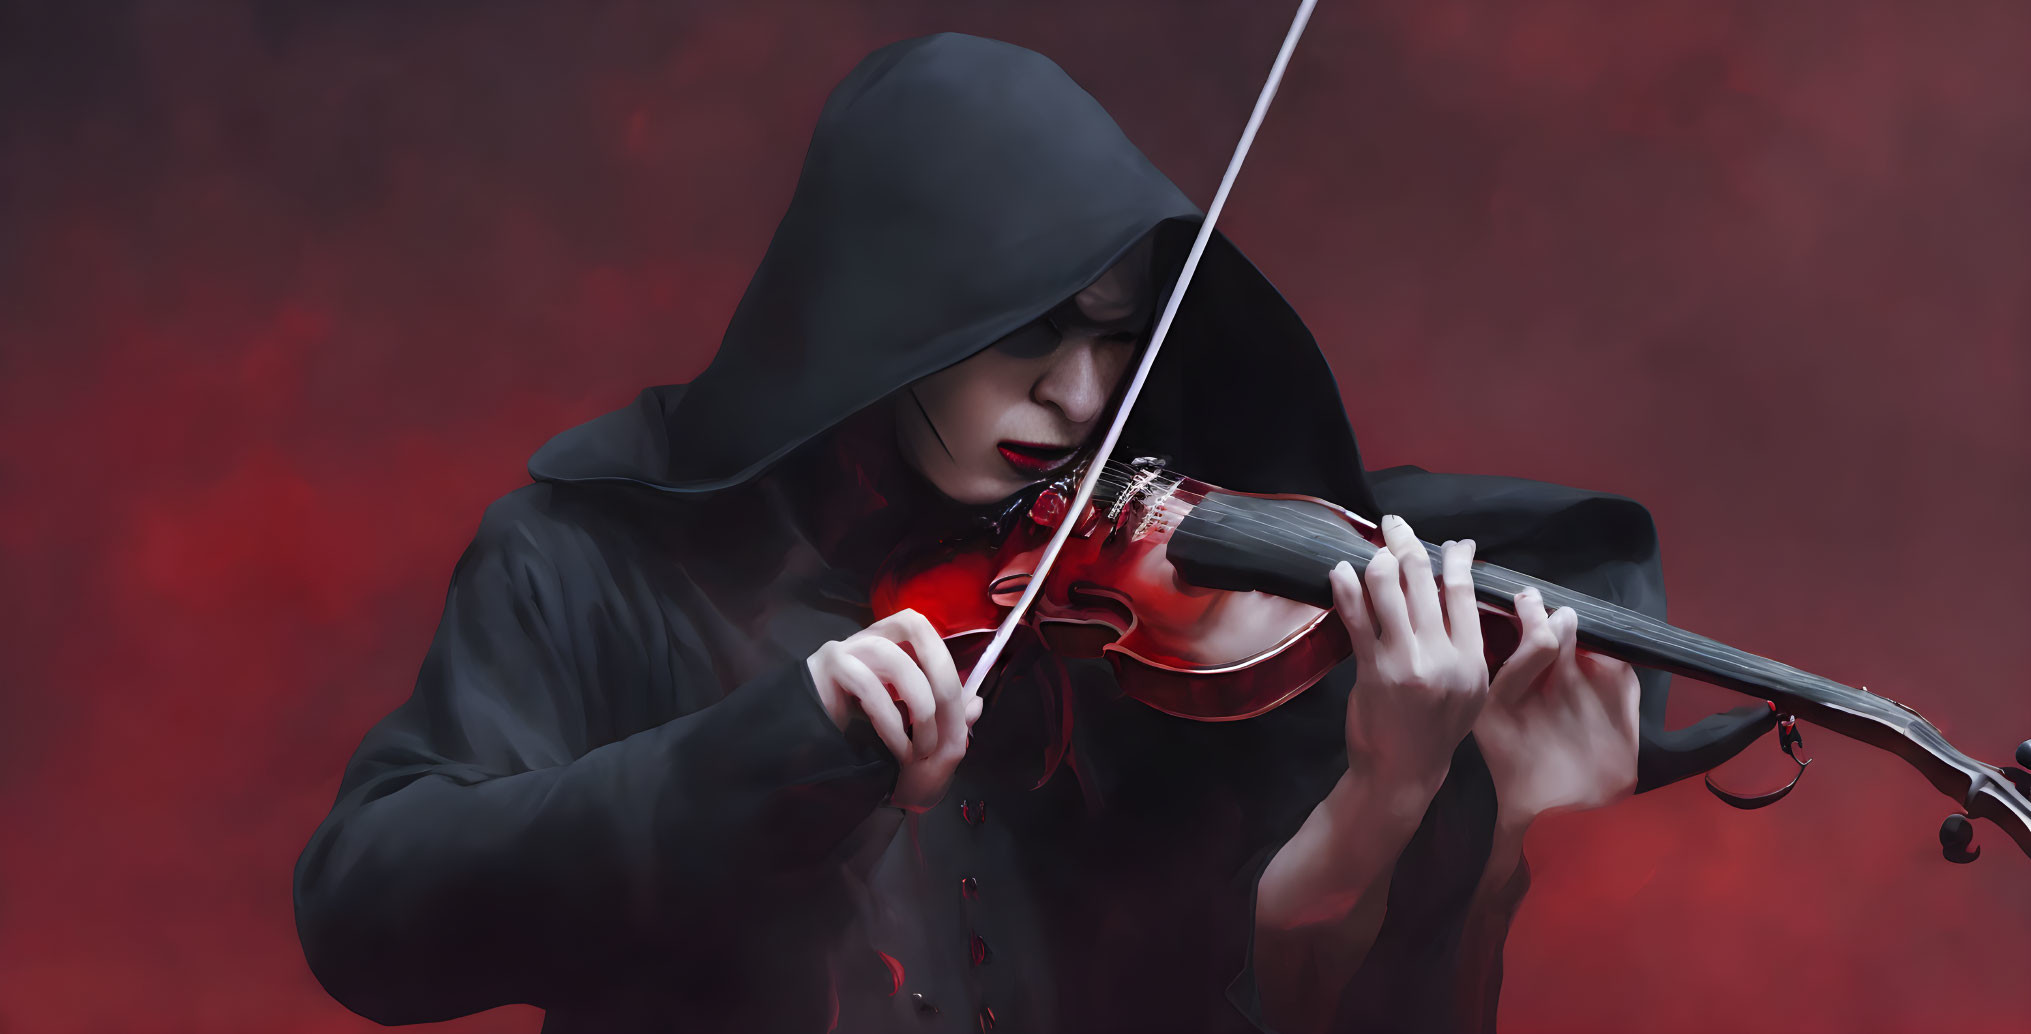 The dark violinist